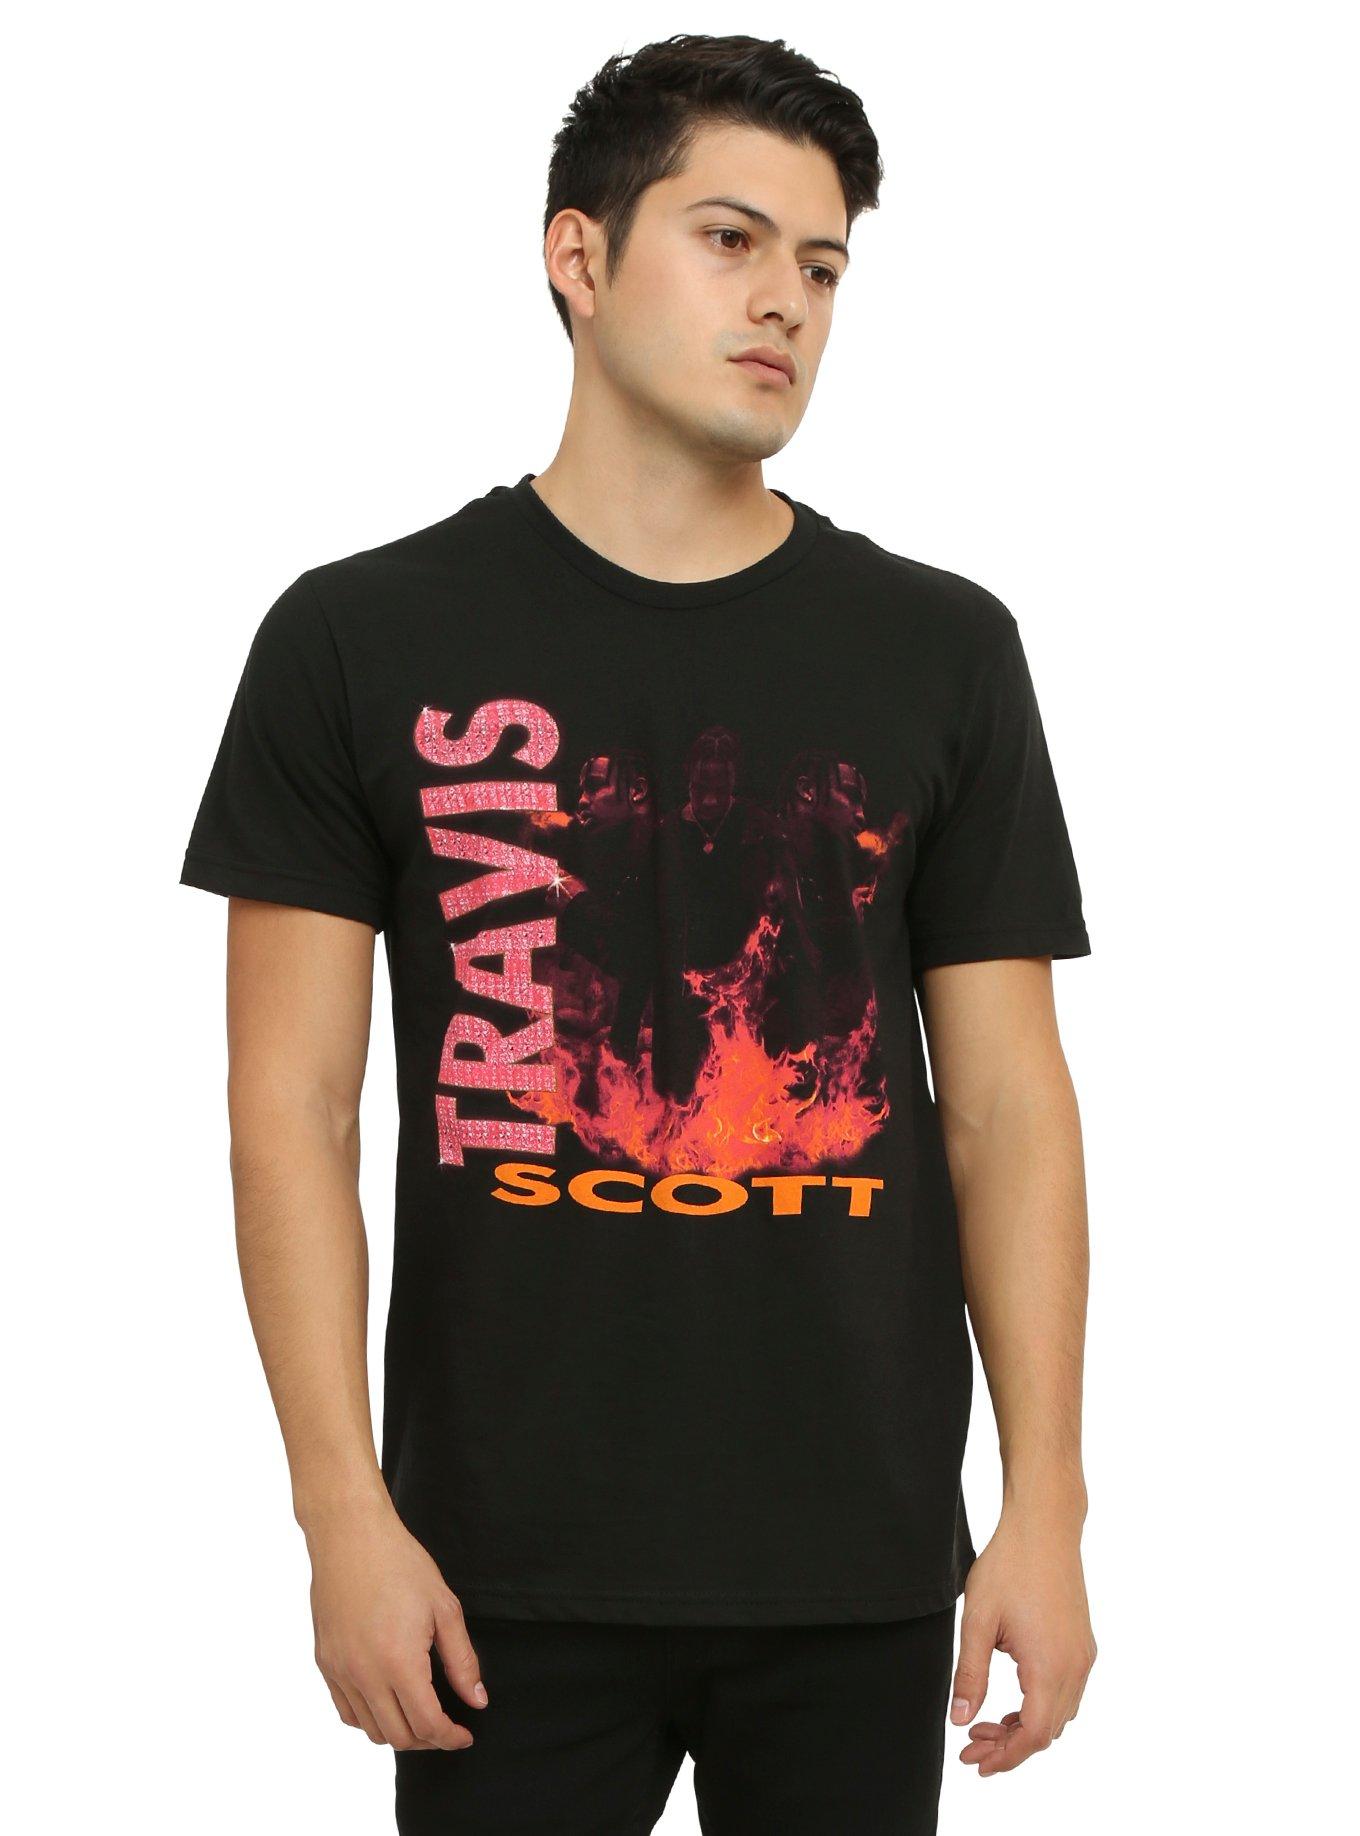 Cactus Jack Fire T-Shirt